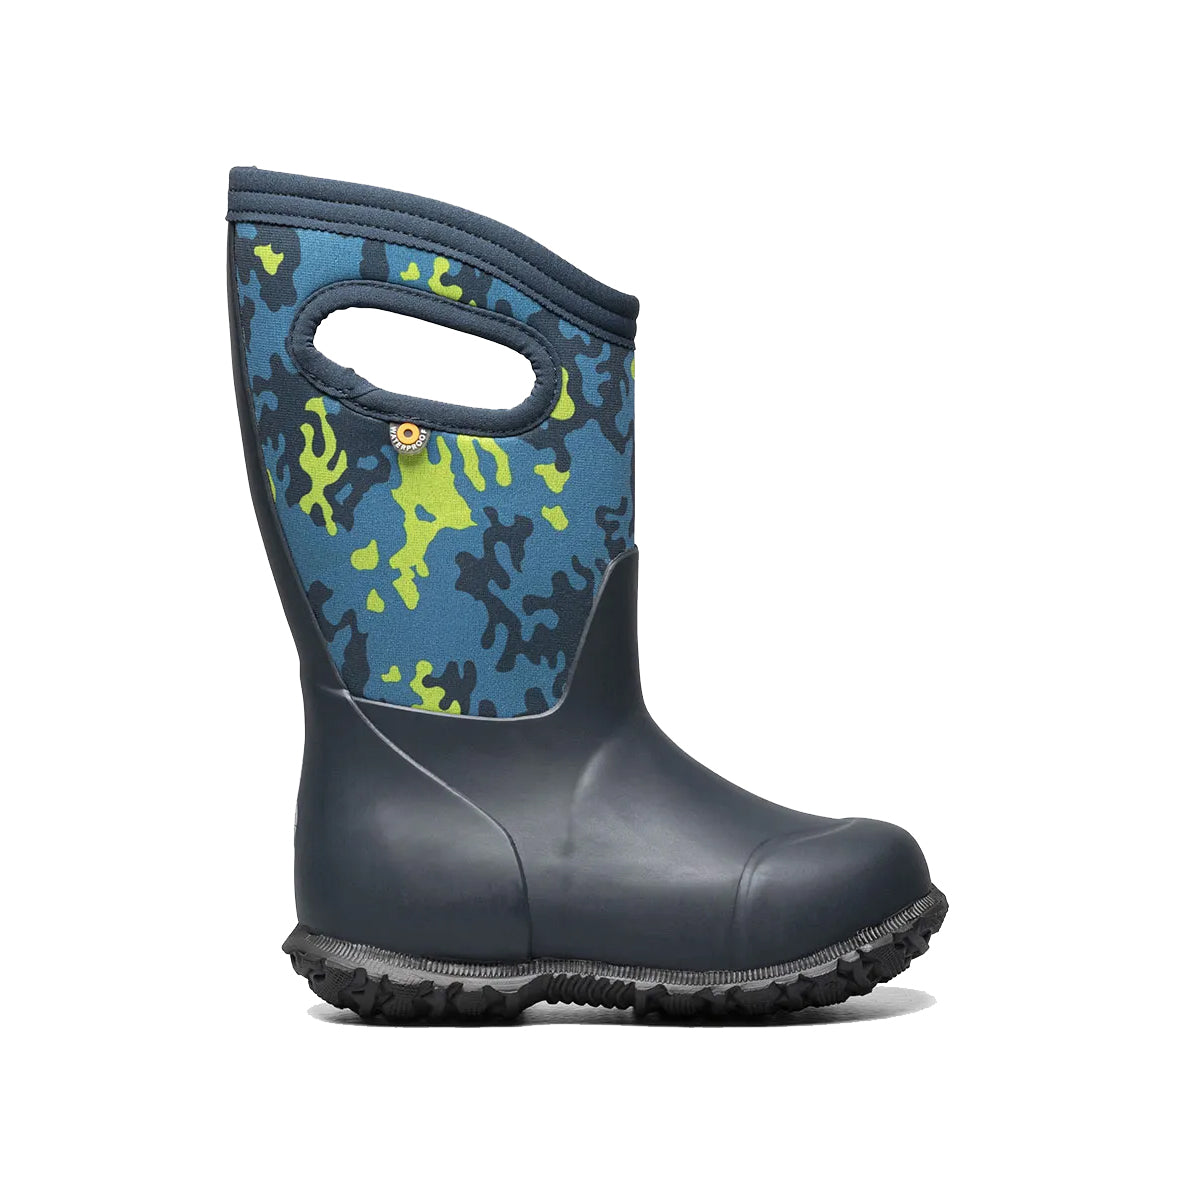 Child's BOGS YORK NEO CAMO BLUE MULTI - KIDS insulated rain boot with Eco-friendly EVA footbed.